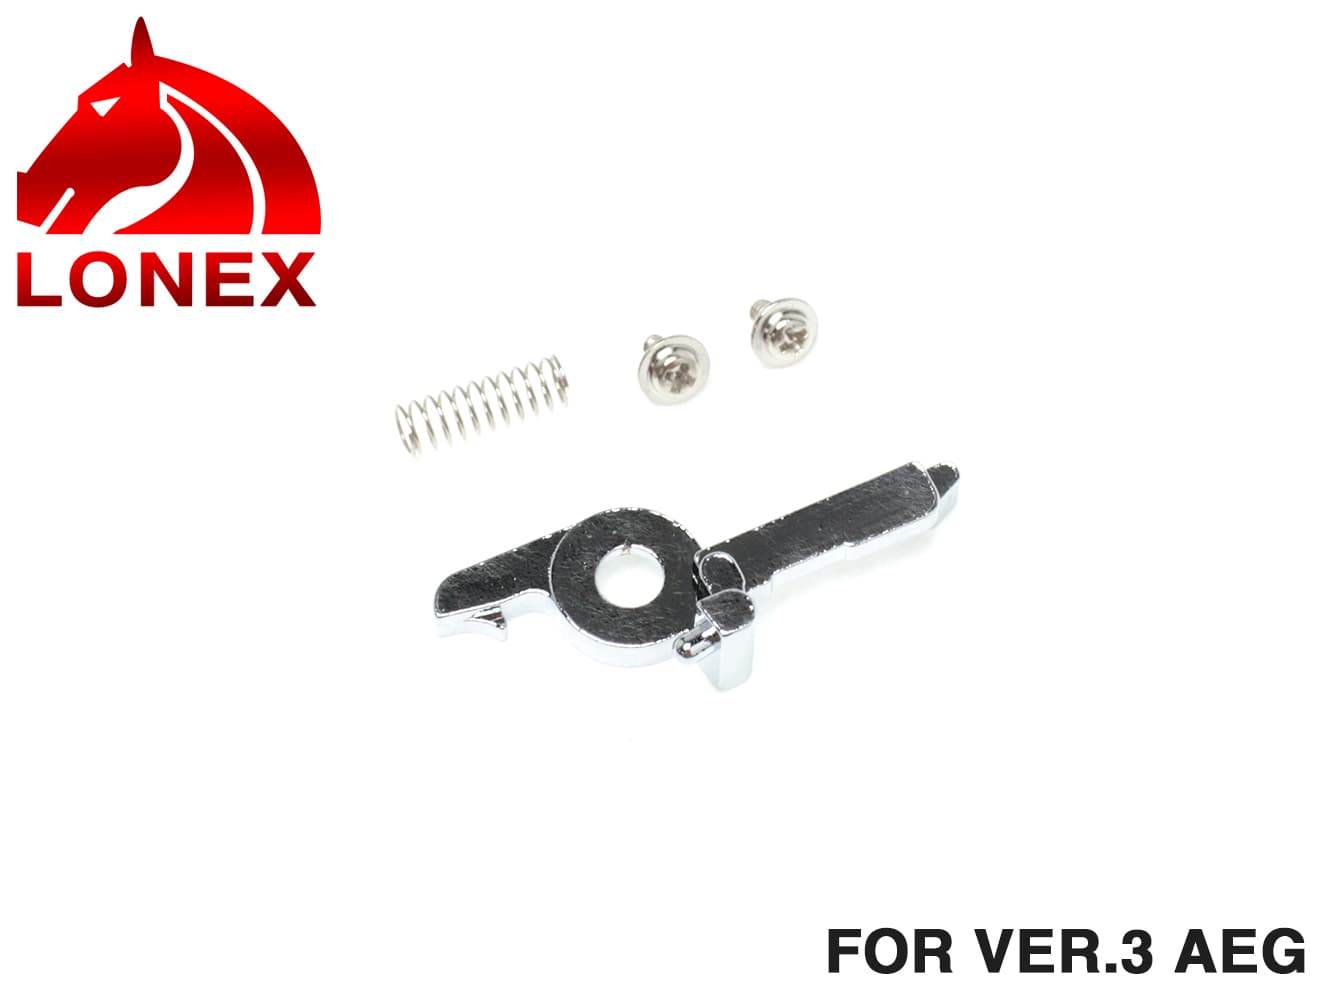 LONEX ハードメッキ カットオフレバー Ver3◆各社 スタンダード 電動ガン バージョン3 メカボックス対応 ニッケルメッキで表面強度アップ